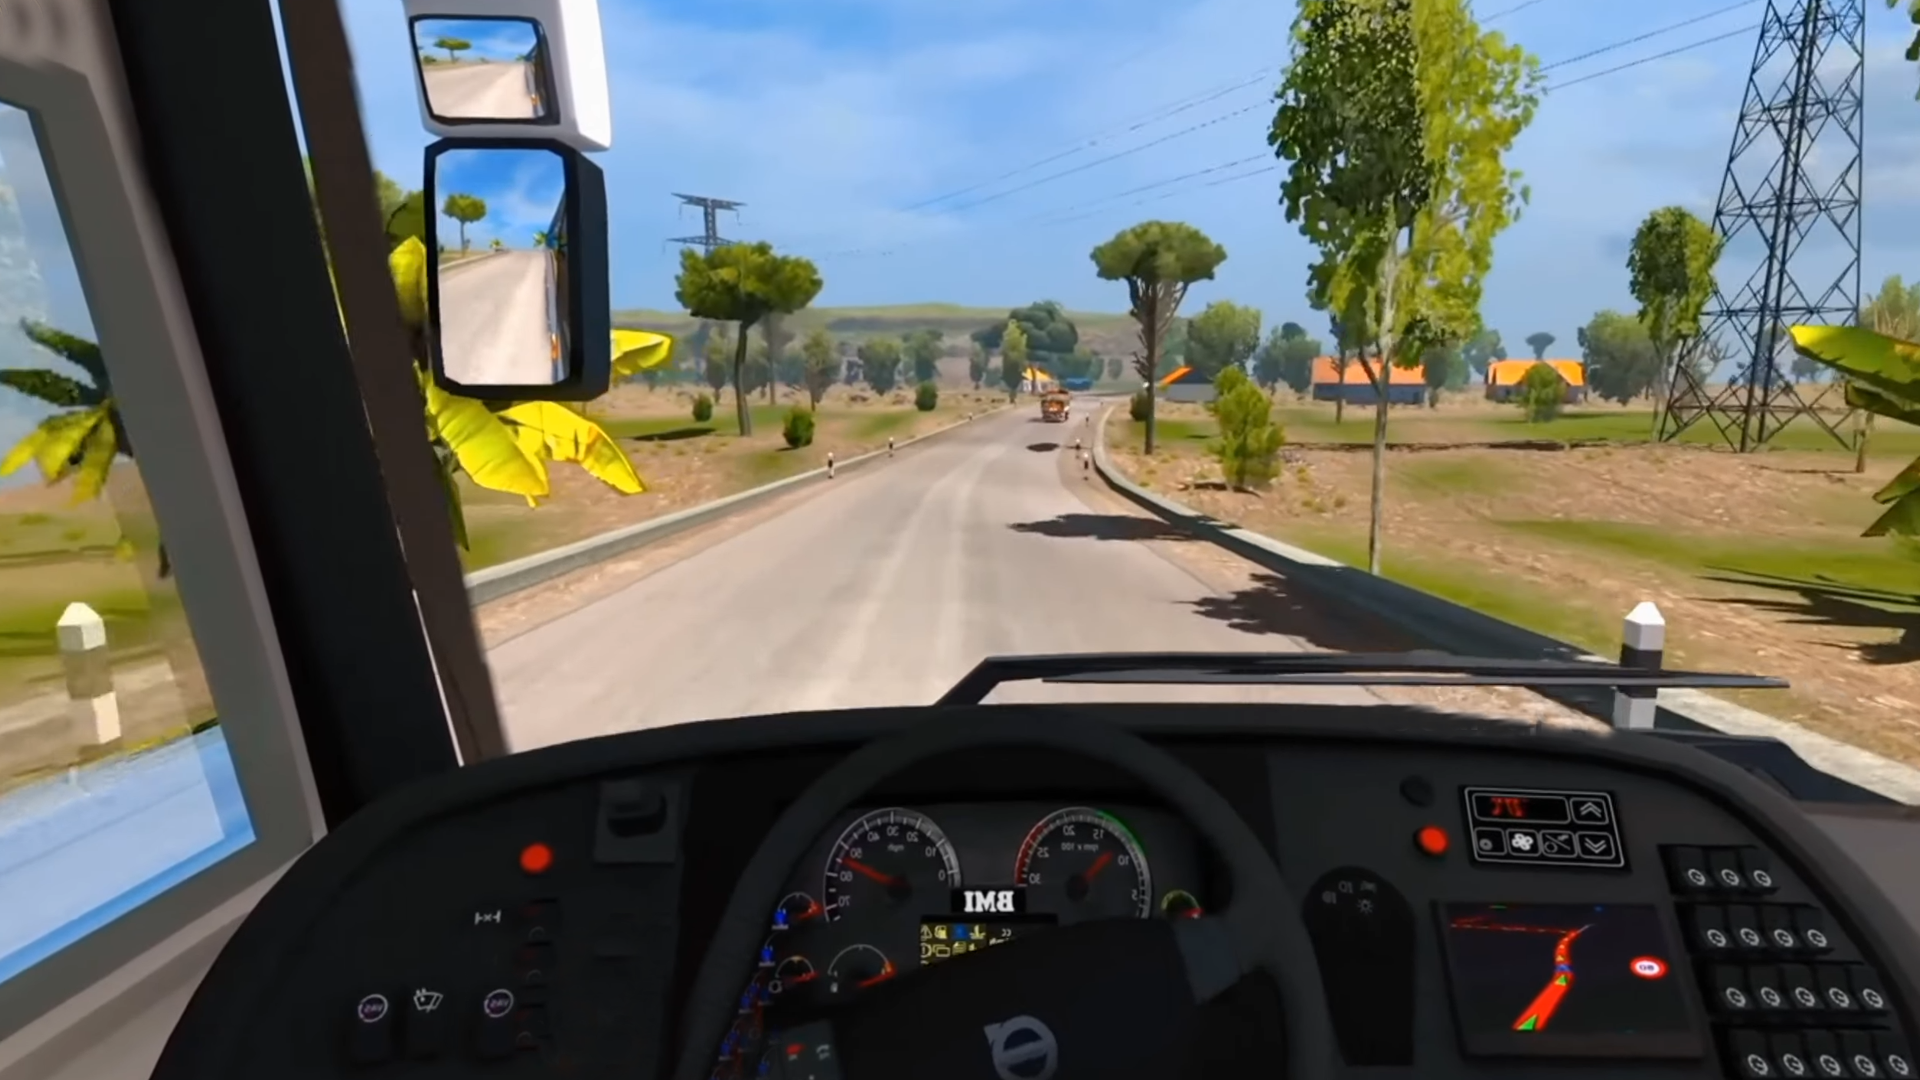 Bus Simulator: Ultra Pro